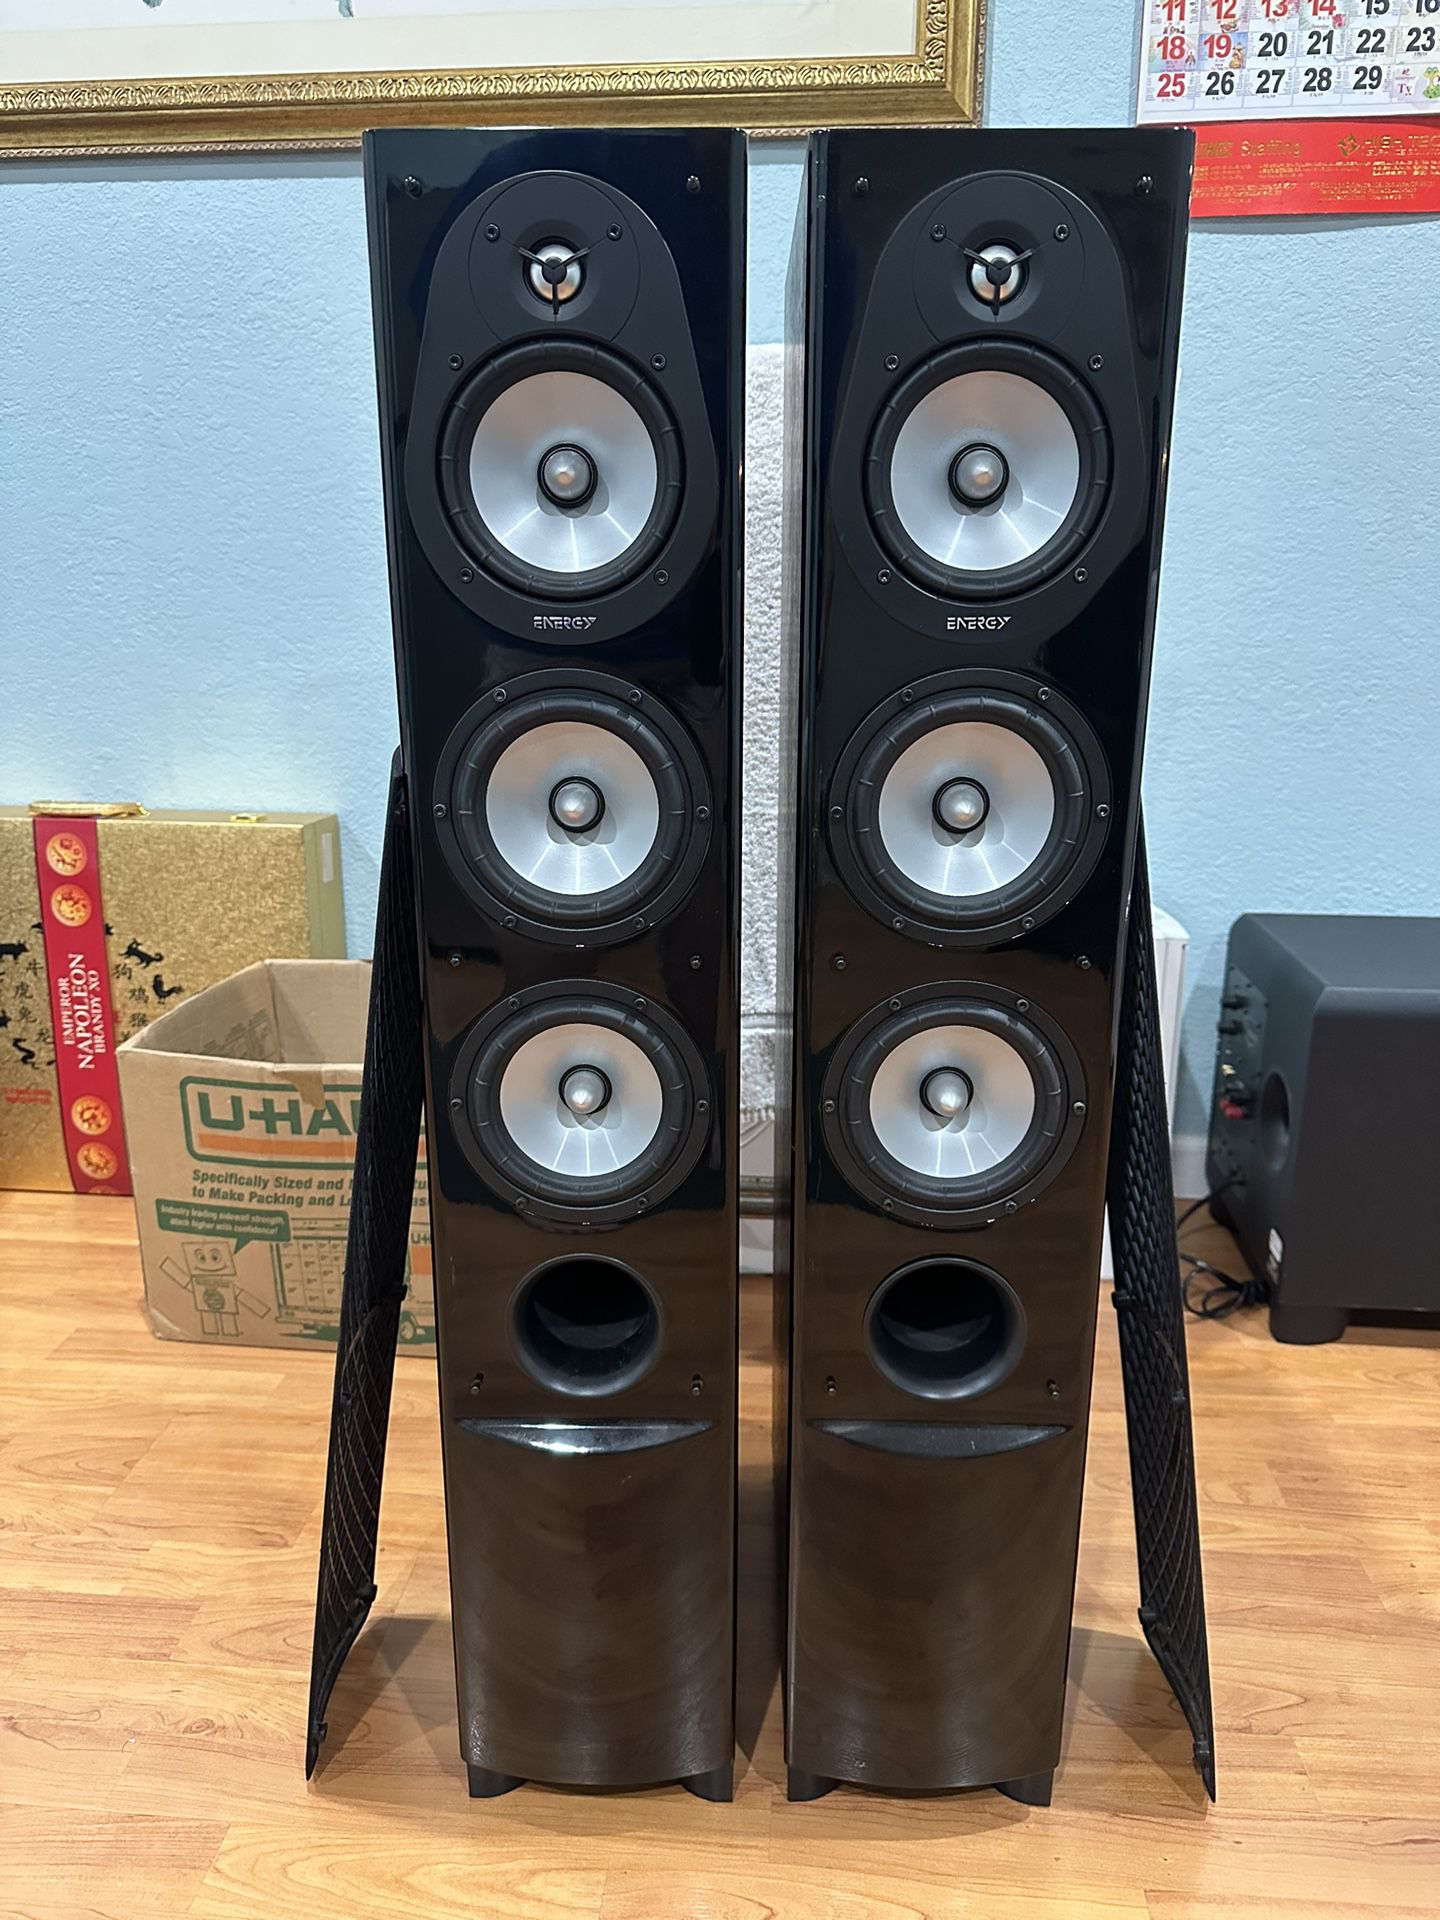 Energy CF-50 Connoisseur Floor Standing Main Tower Speakers